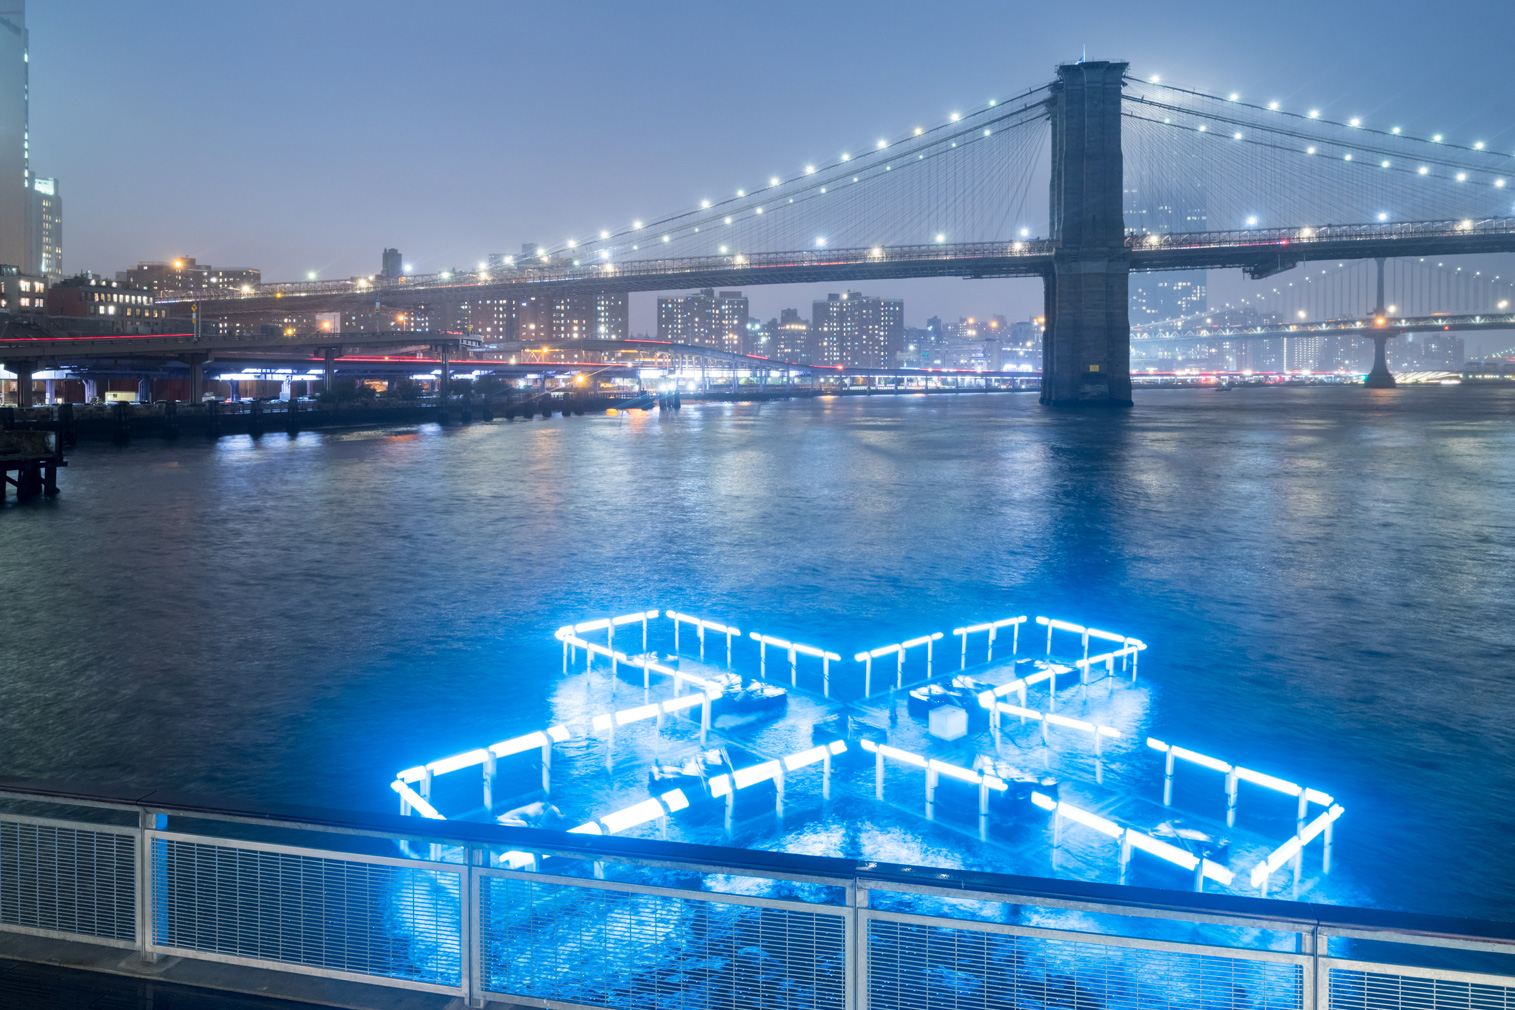 Floating LED sculpture on Manhattan’s East River